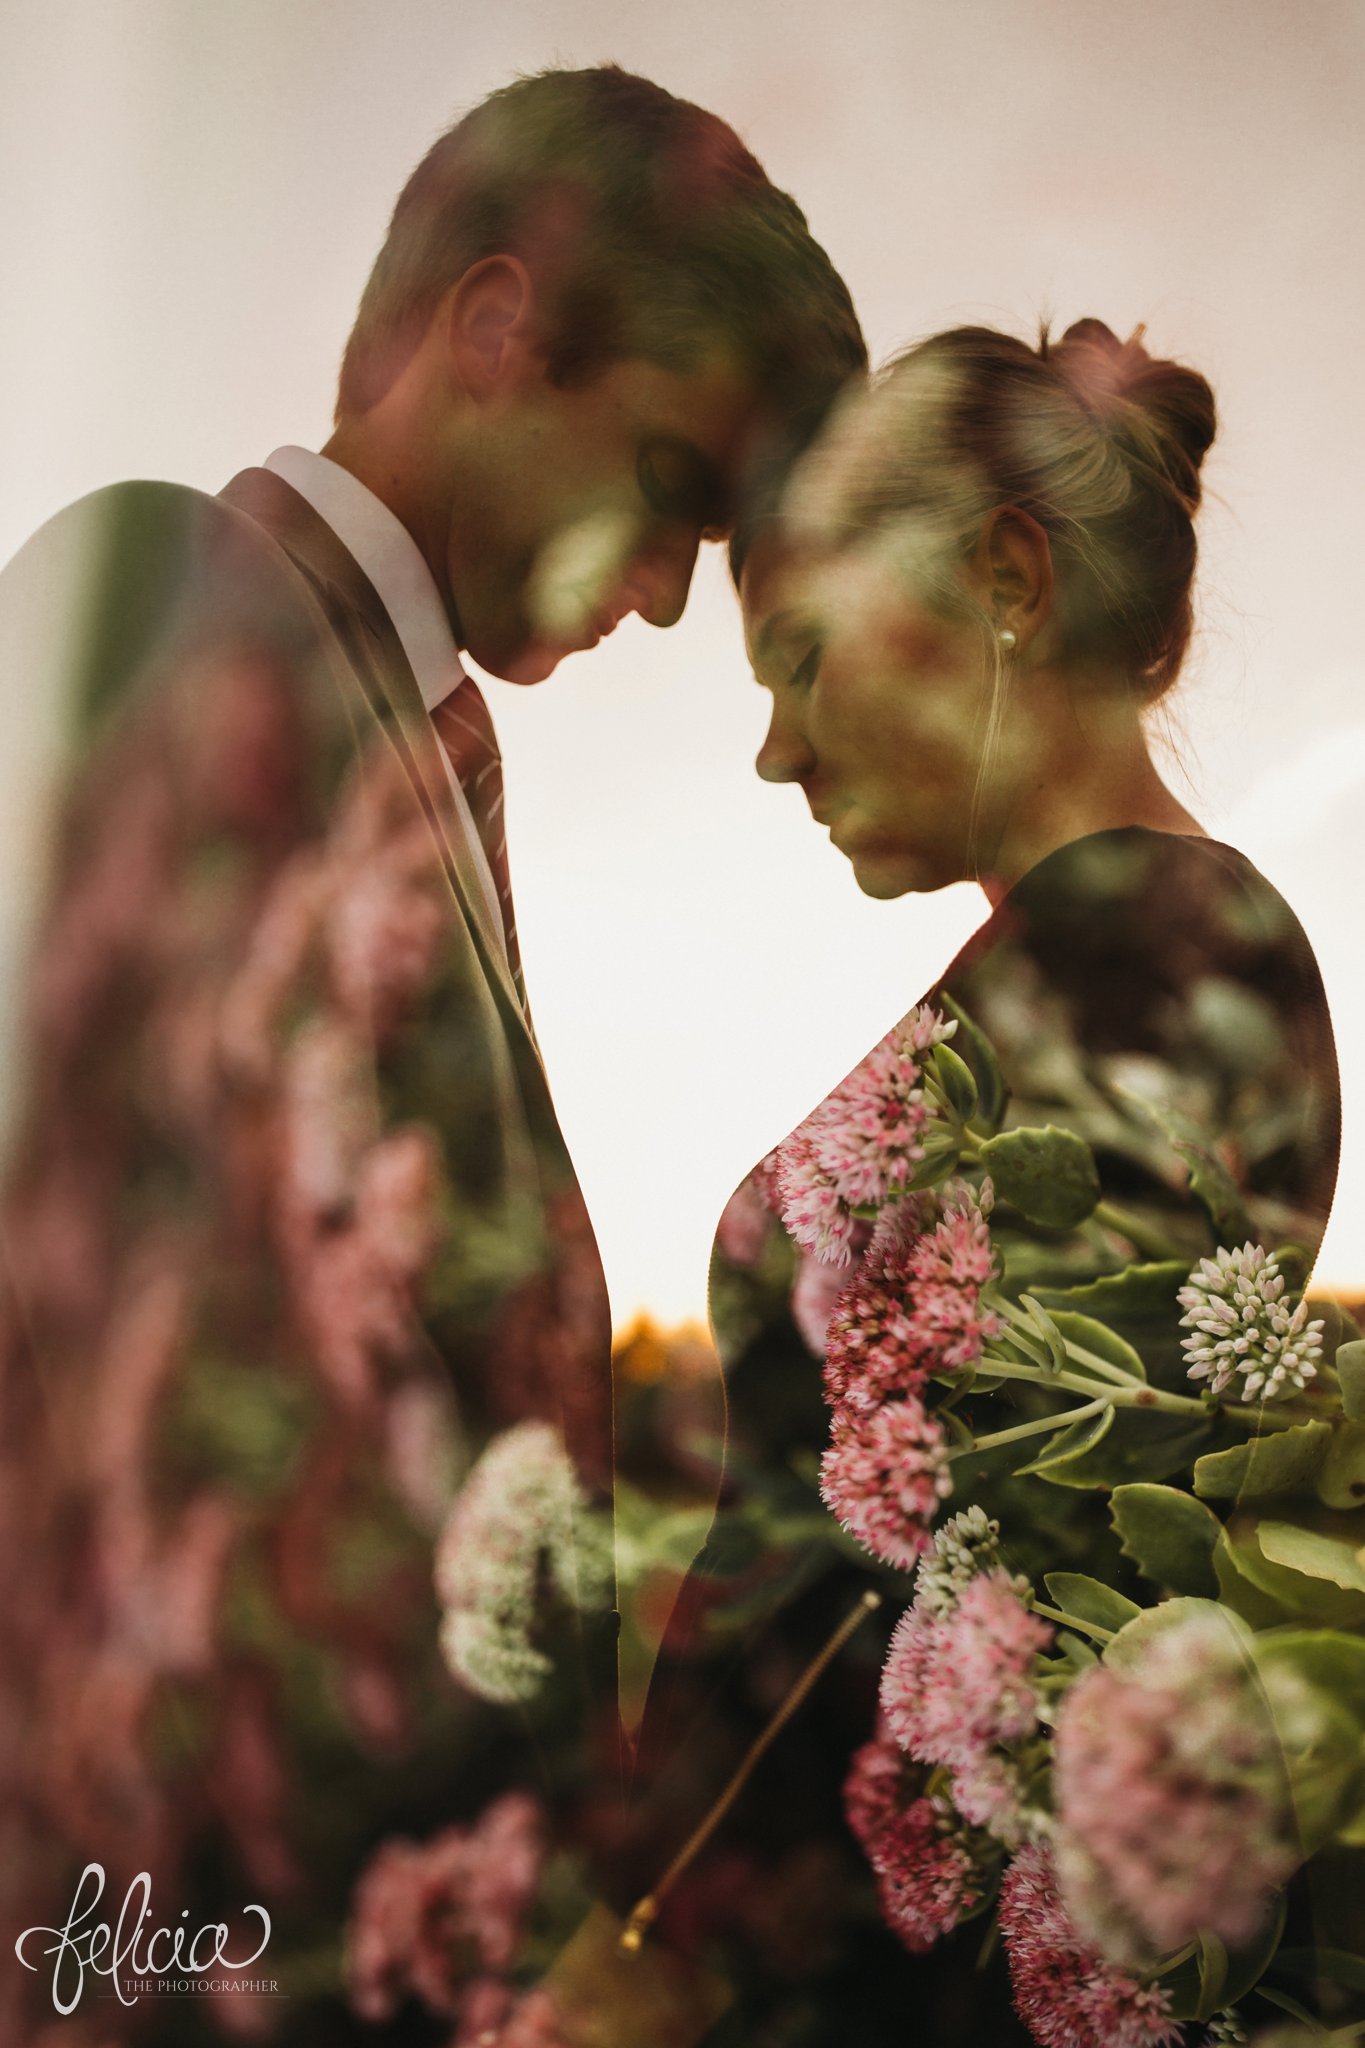 images by feliciathephotographer.com | wedding photographer | kansas city missouri | engagement | pink flowers | details | romantic | true love | double exposure | golden hour | sunset 